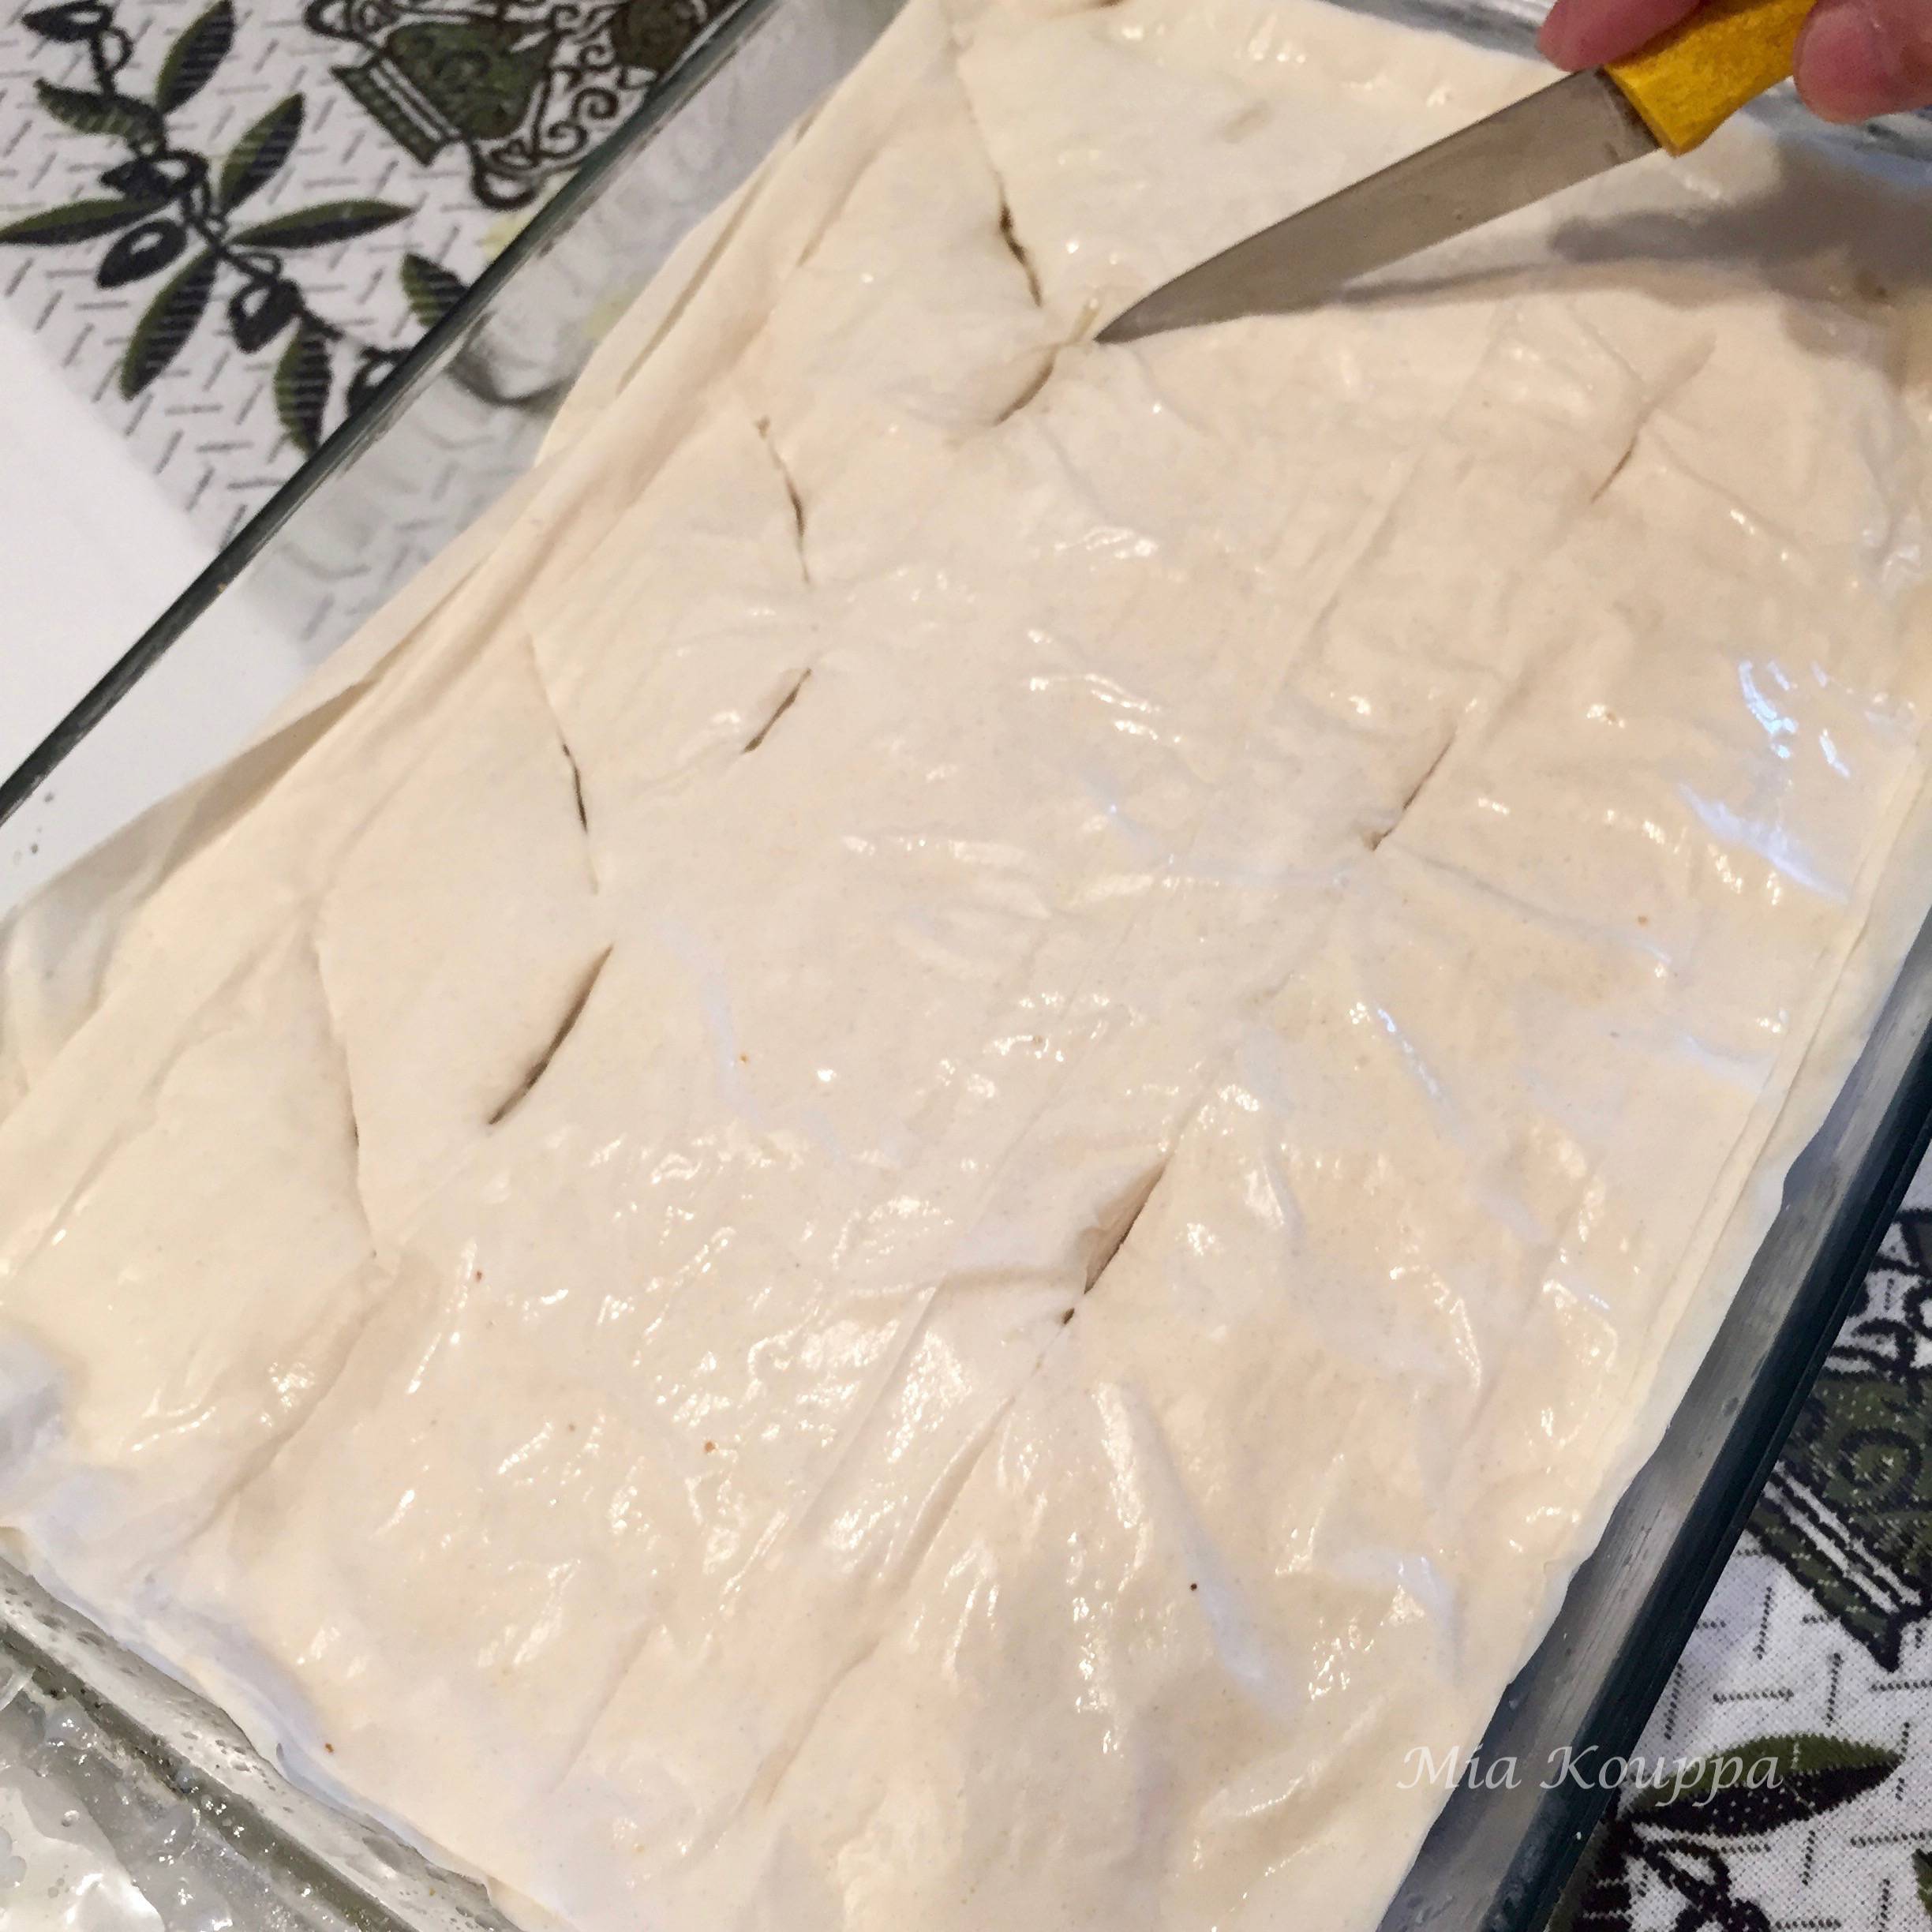 Scoring the phyllo dough before baking